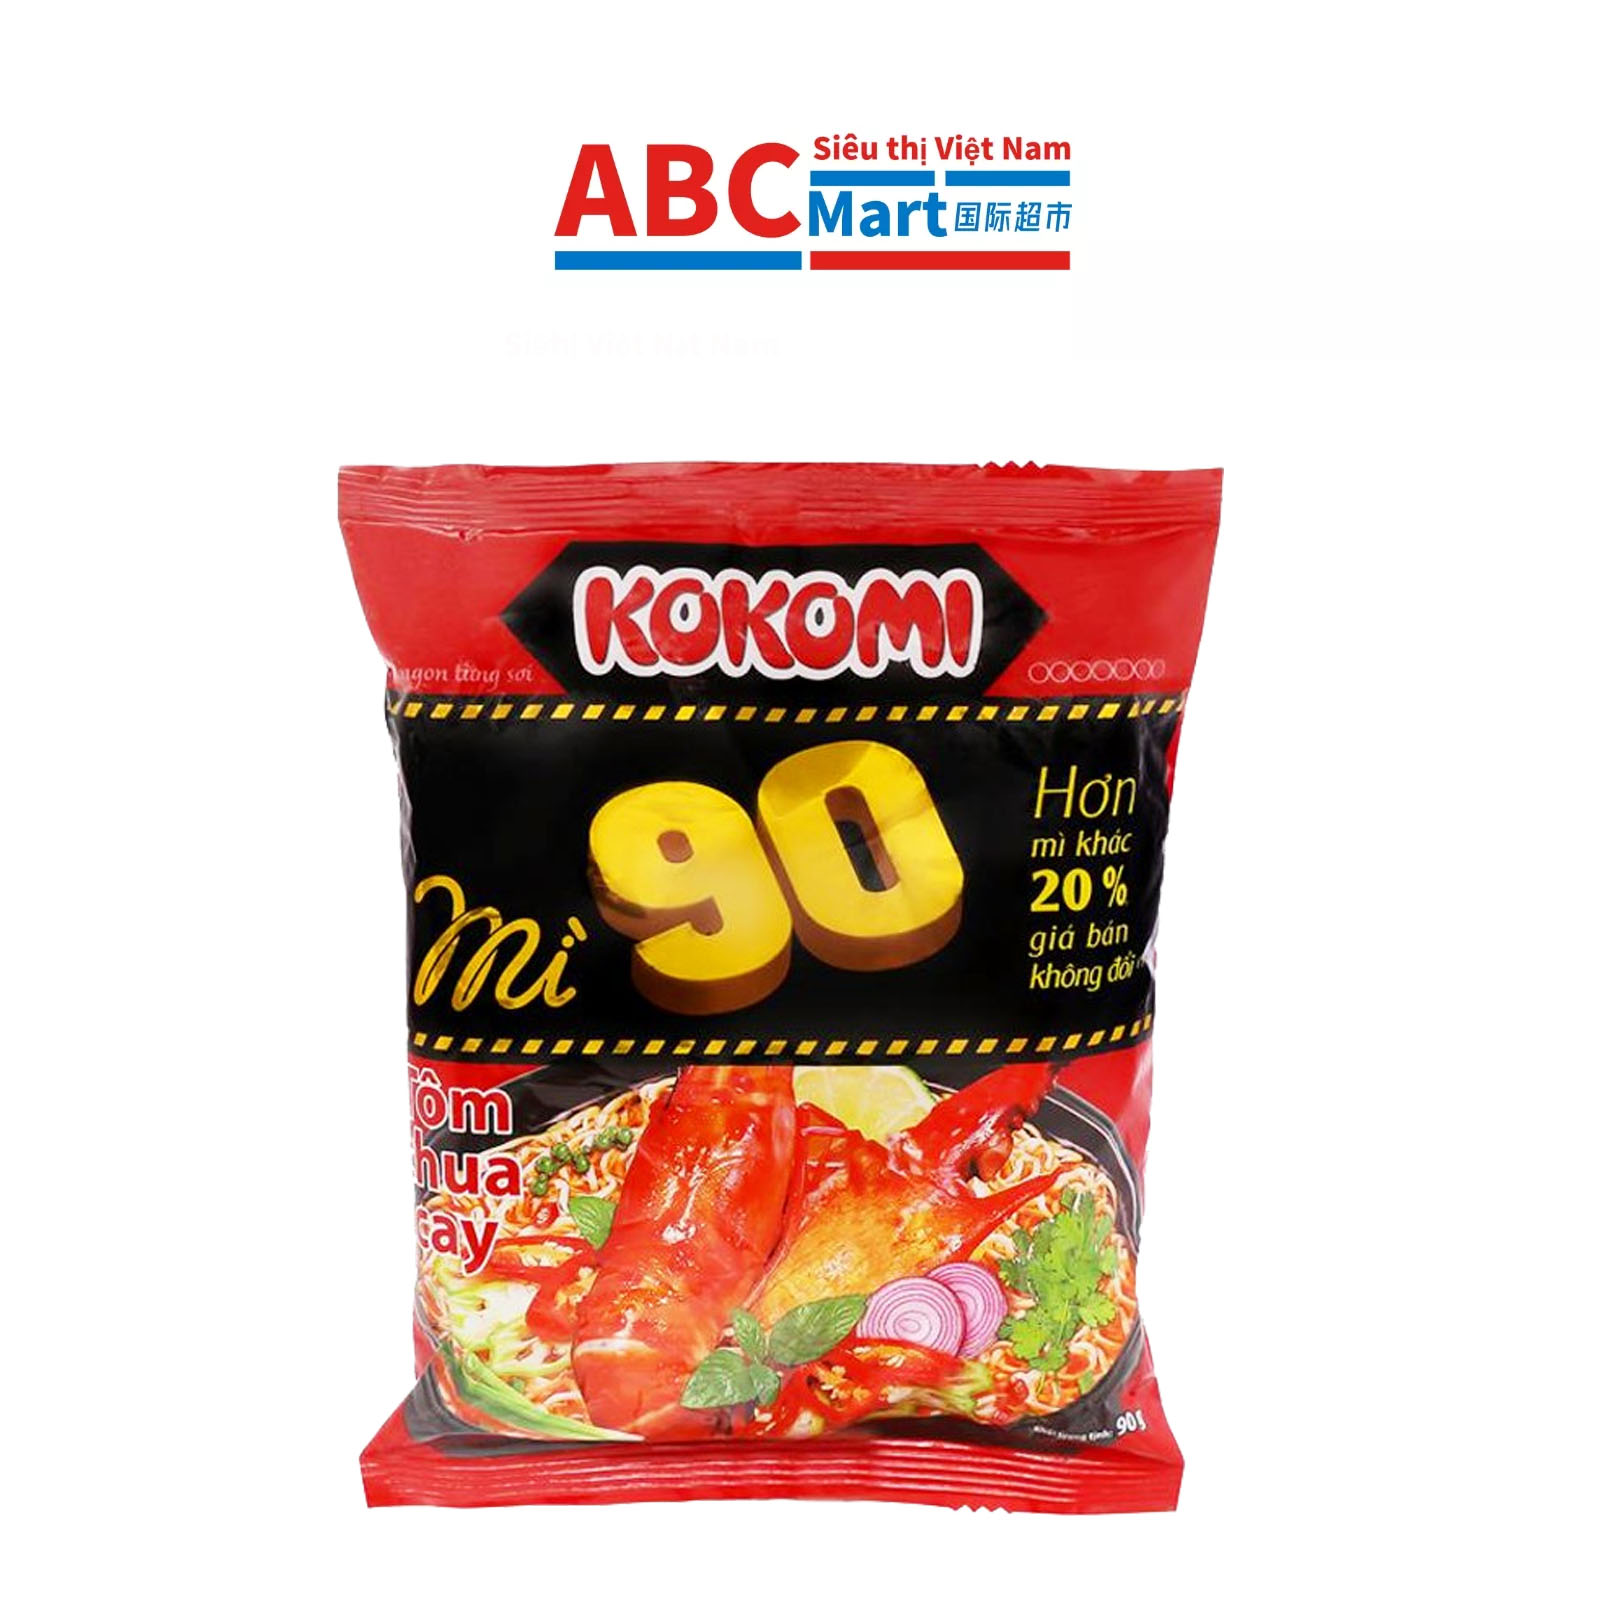 【Việt Nam-Mỳ Kokomi 90g】Kokomi90方便面-ABCMart 国际超市